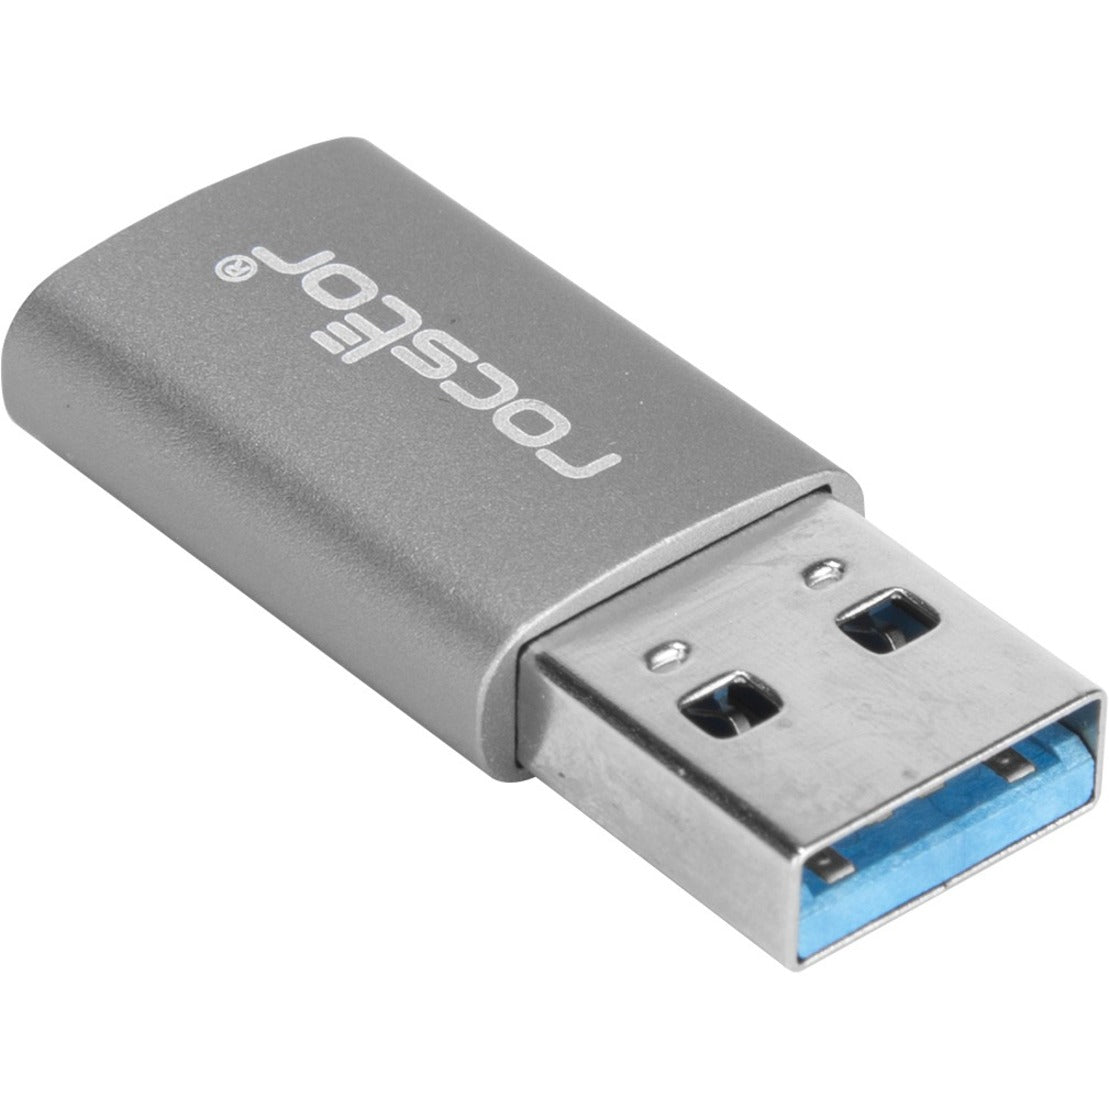 Rocstor Y10A207-G1 Premium USB 3.0 Hi-Speed Adattatore USB Tipo A a USB-C (M/F) Reversibile Ricarica Stampato